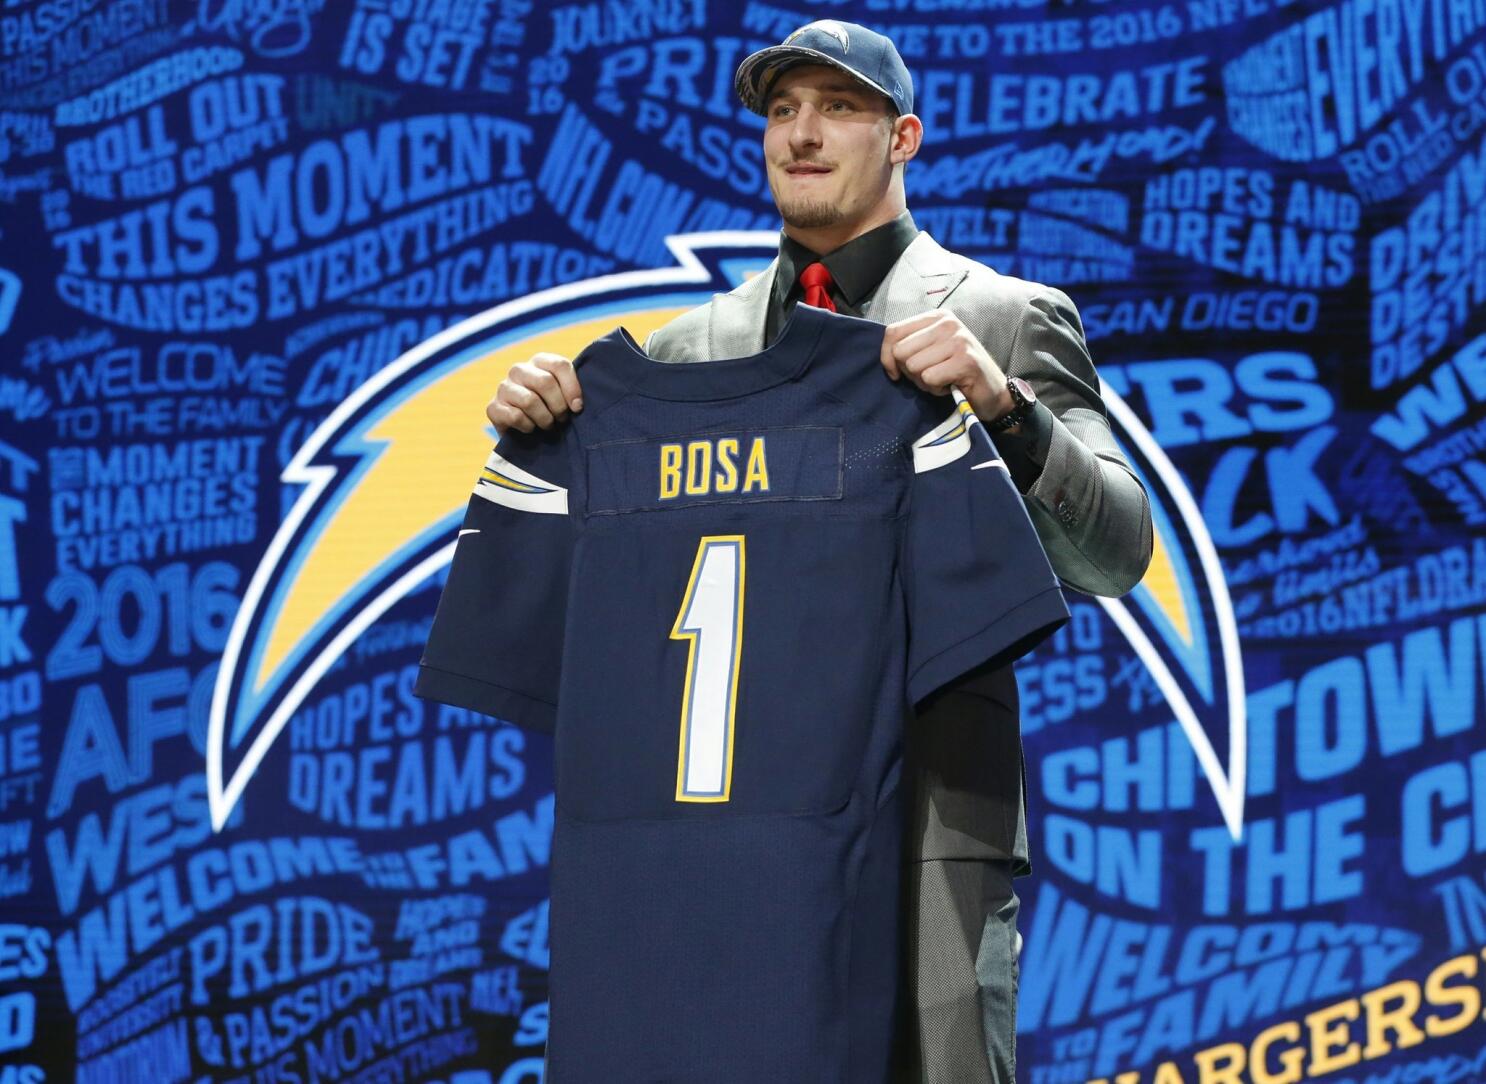 Meet Joey Bosa, the 2016 NFL Draft's Top DE Heading into Next